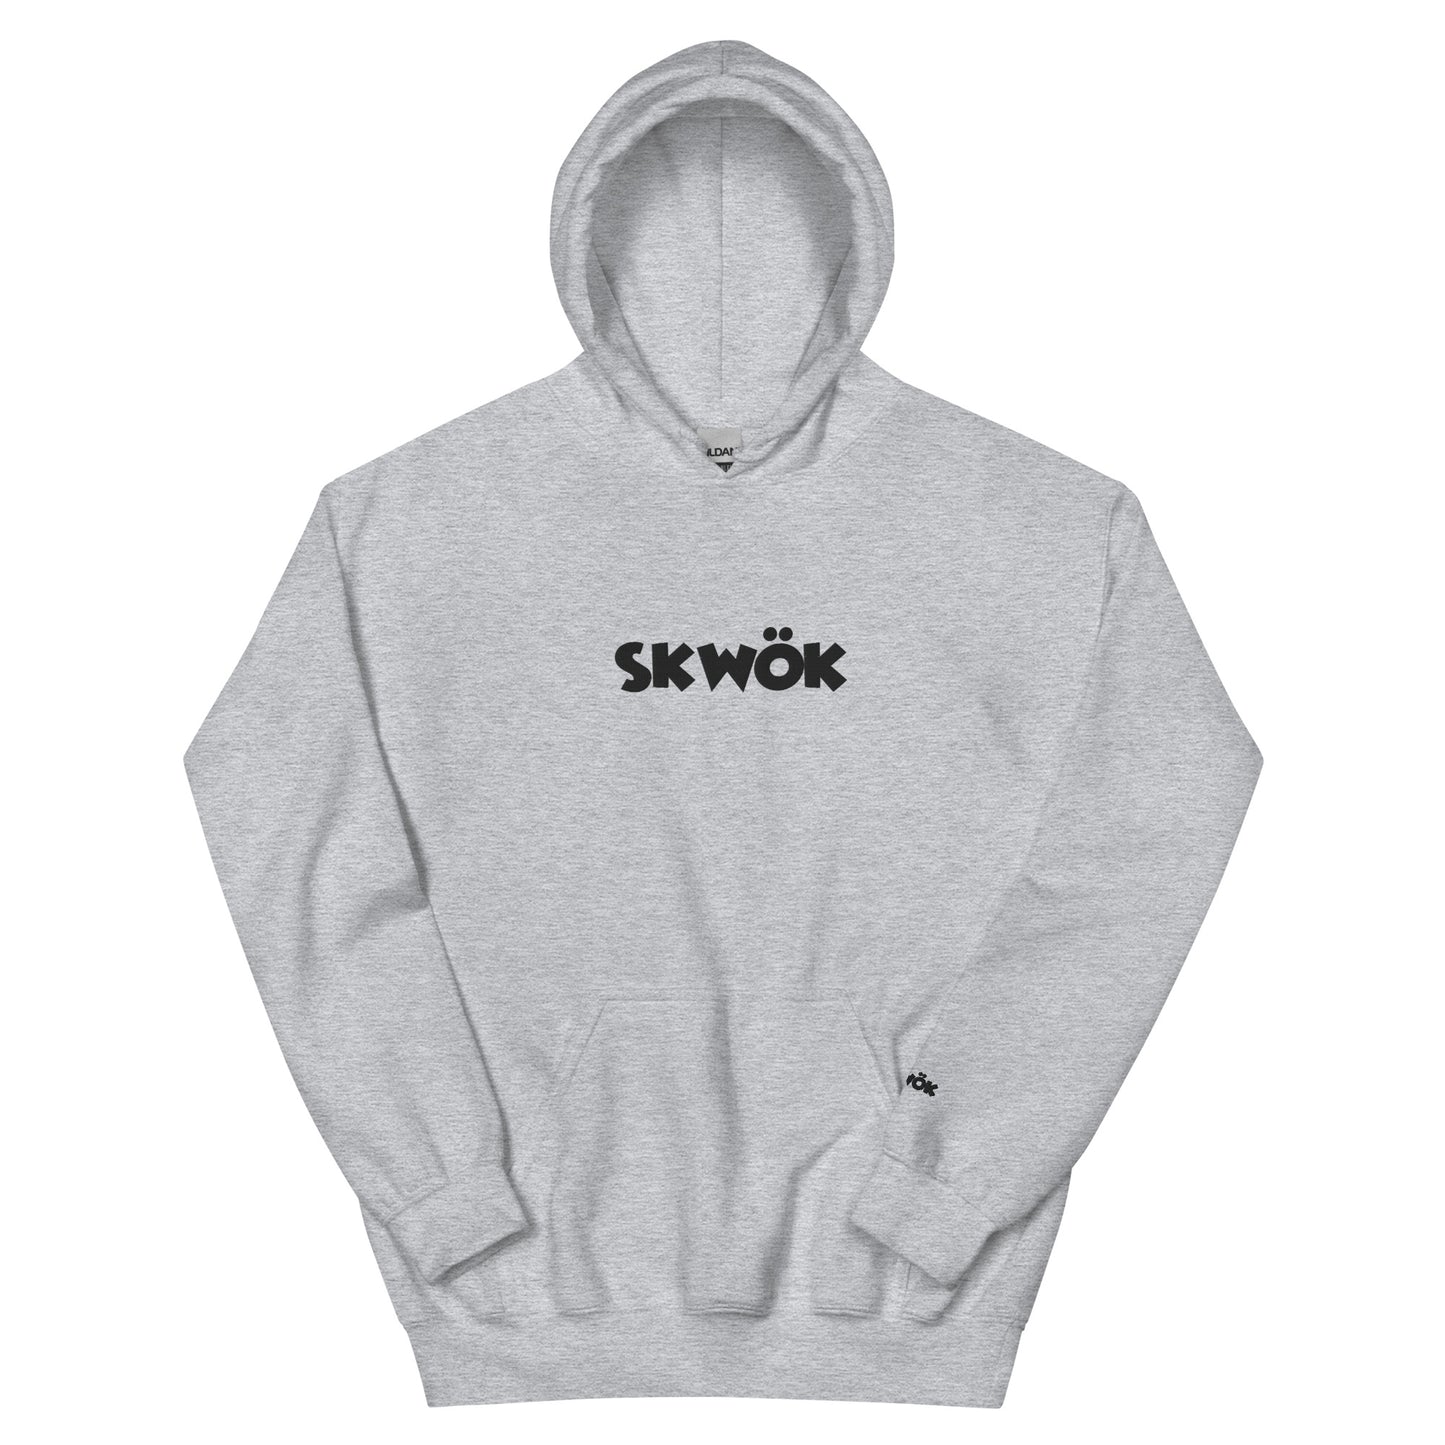 Skwok Brand / Hoodie / Skwok Logo / Embroidered